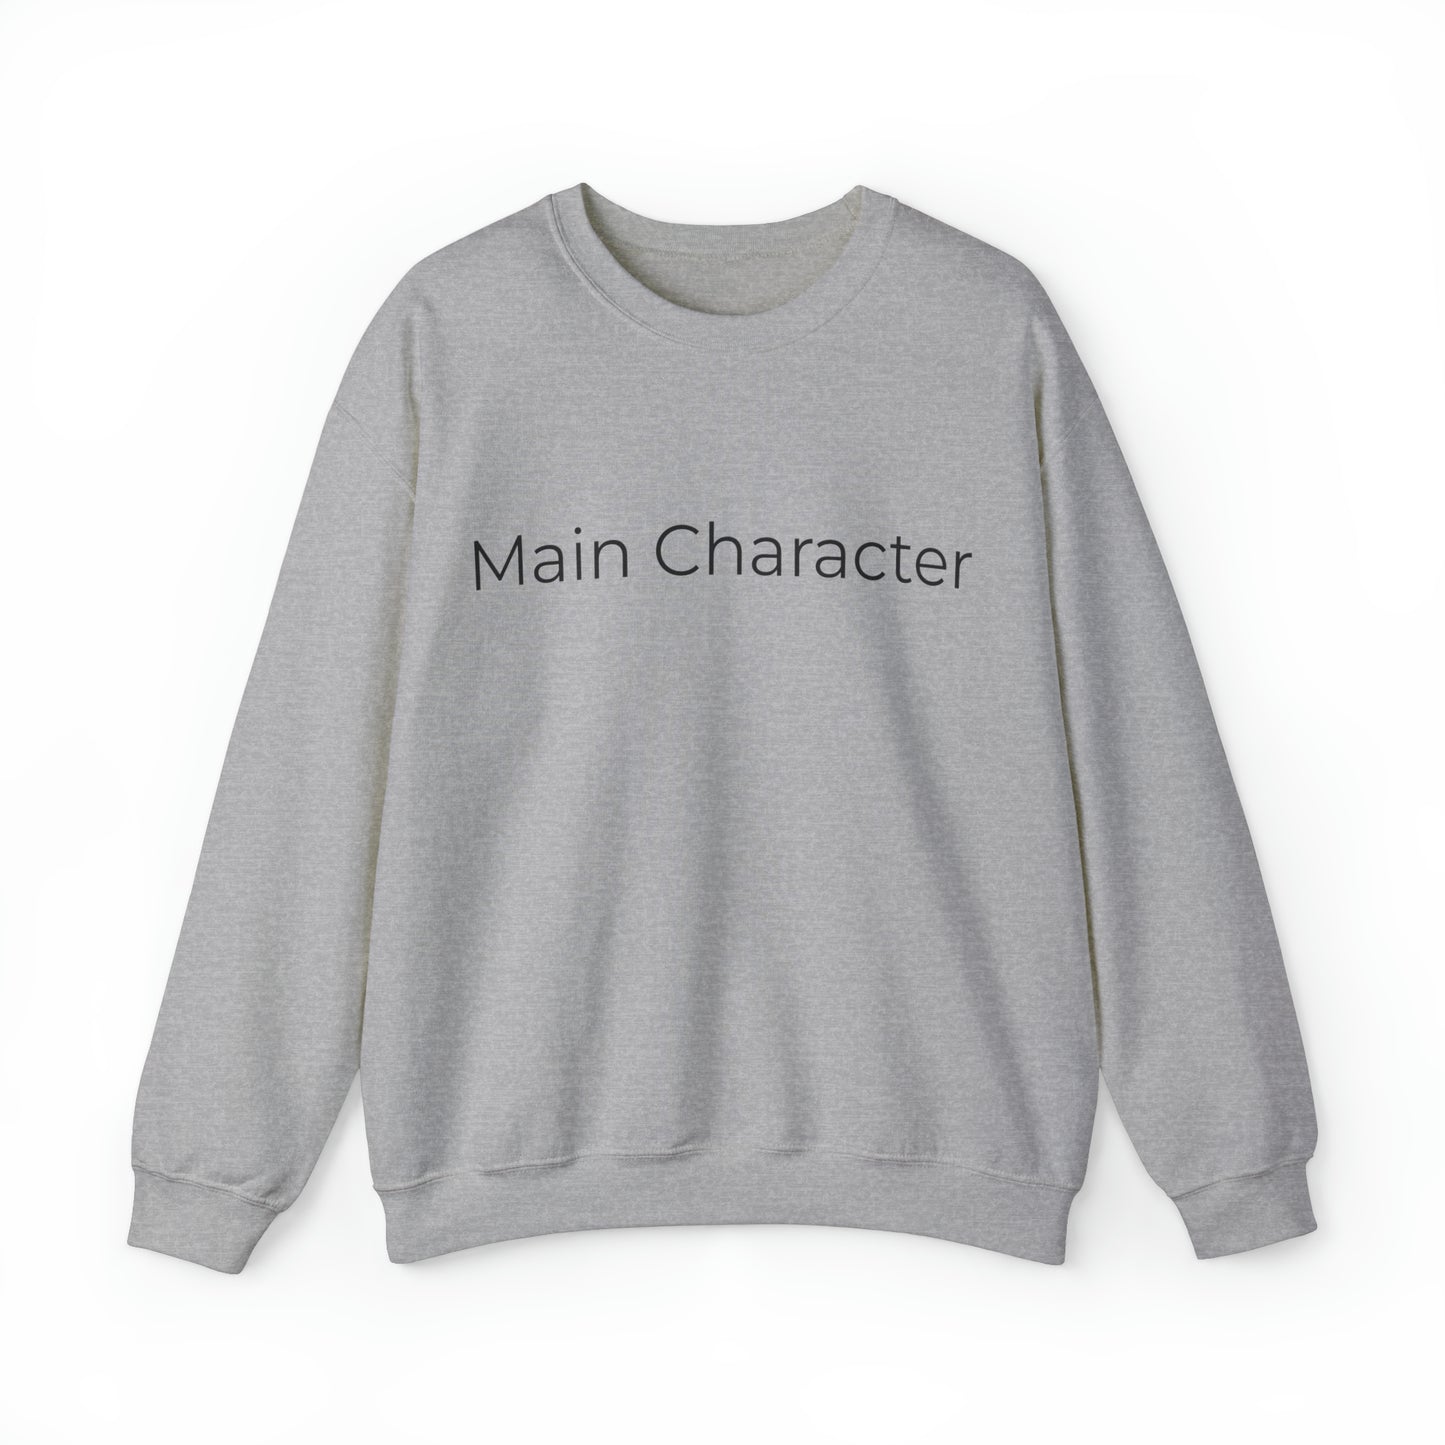 Main Character Sweatshirt - Mind Body & Scents, LLC